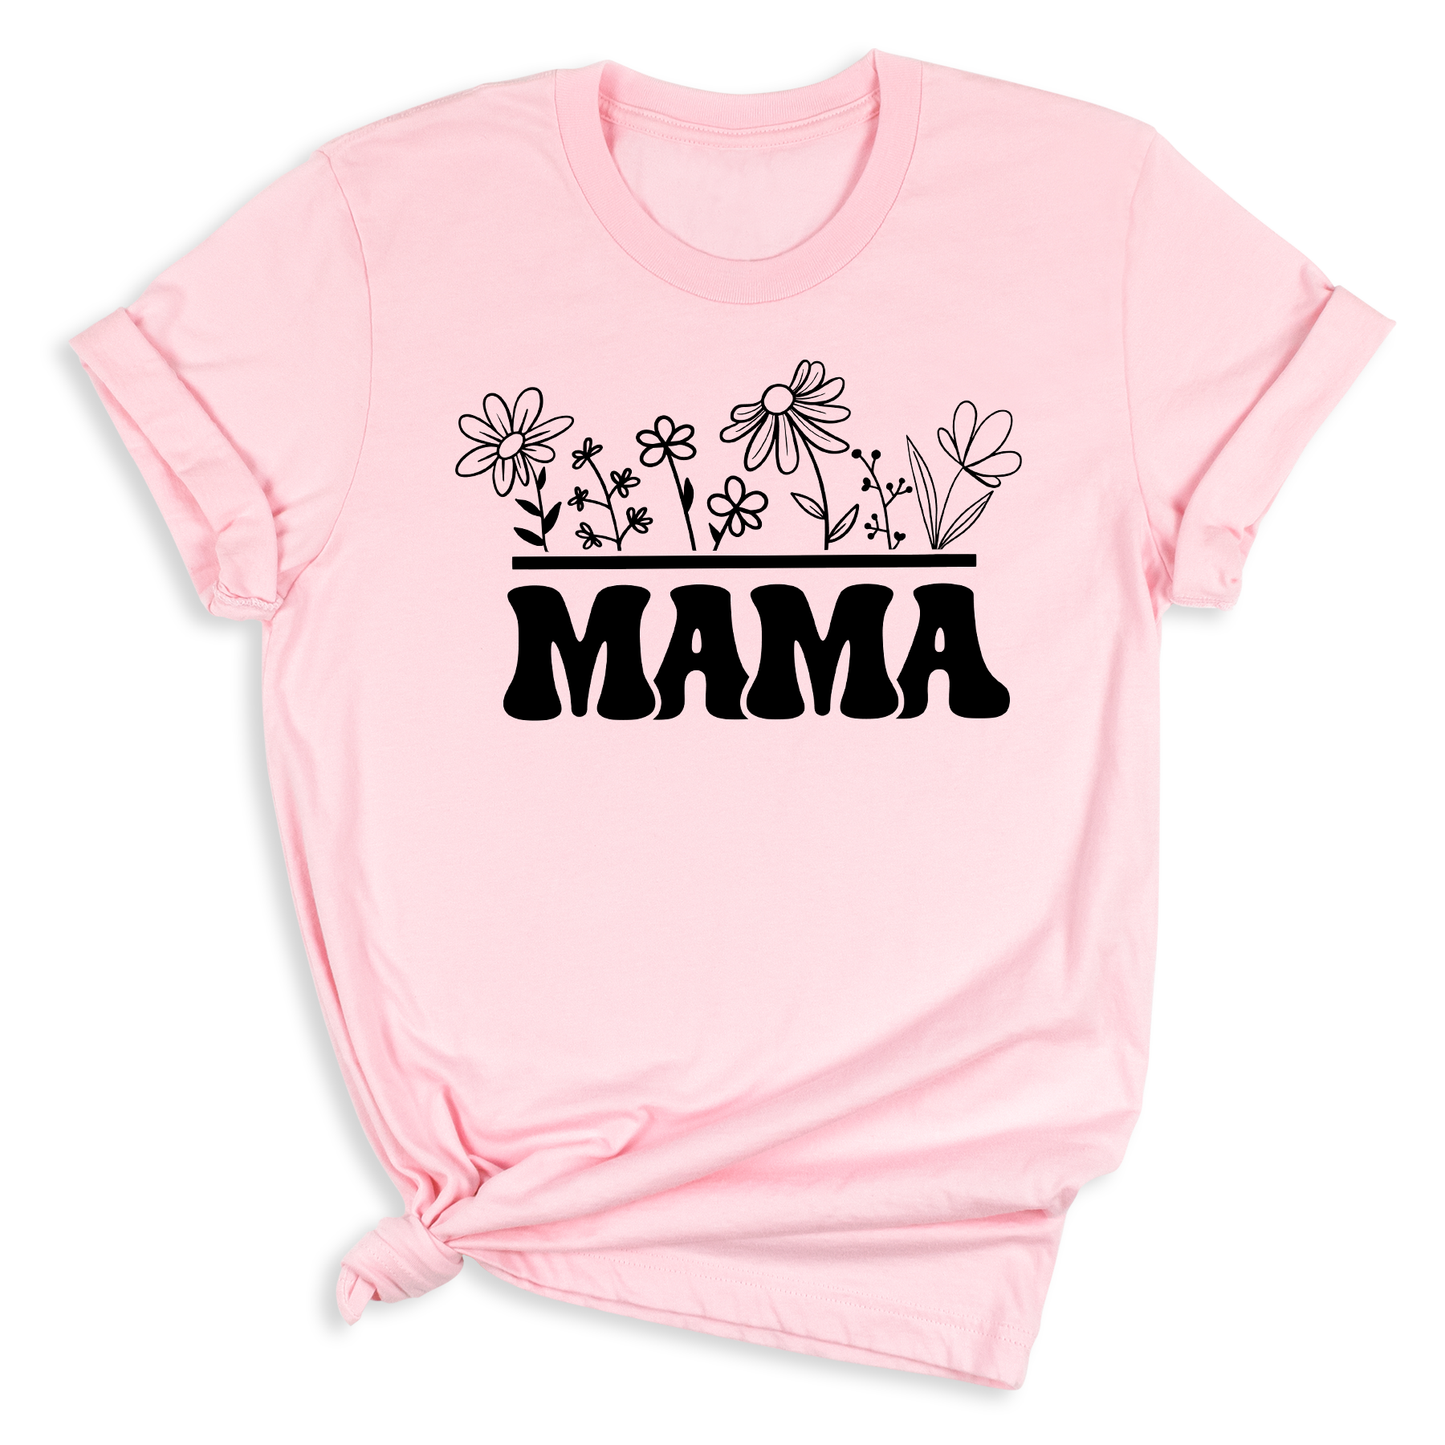 Mother's Day Mama Mini Matching T-Shirt